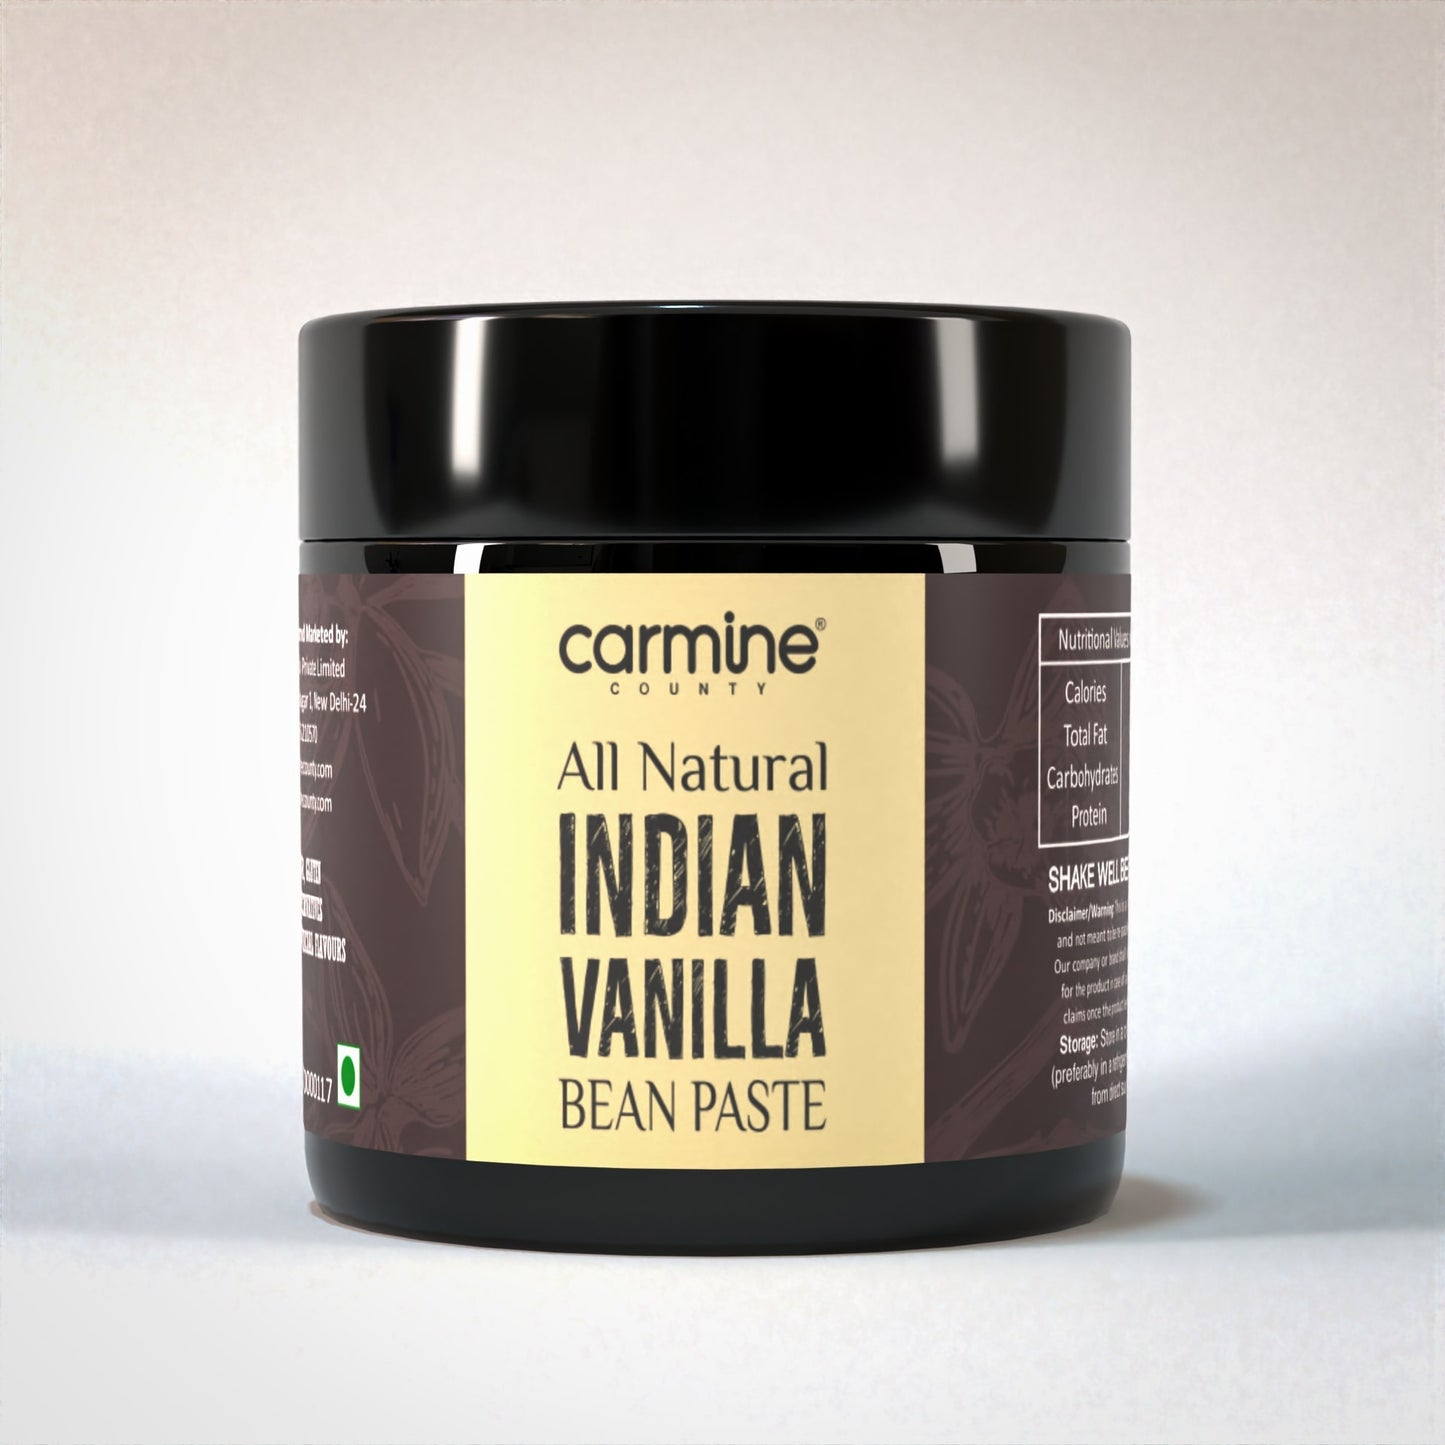 Carmine County All Natural Indian Vanilla Bean Paste